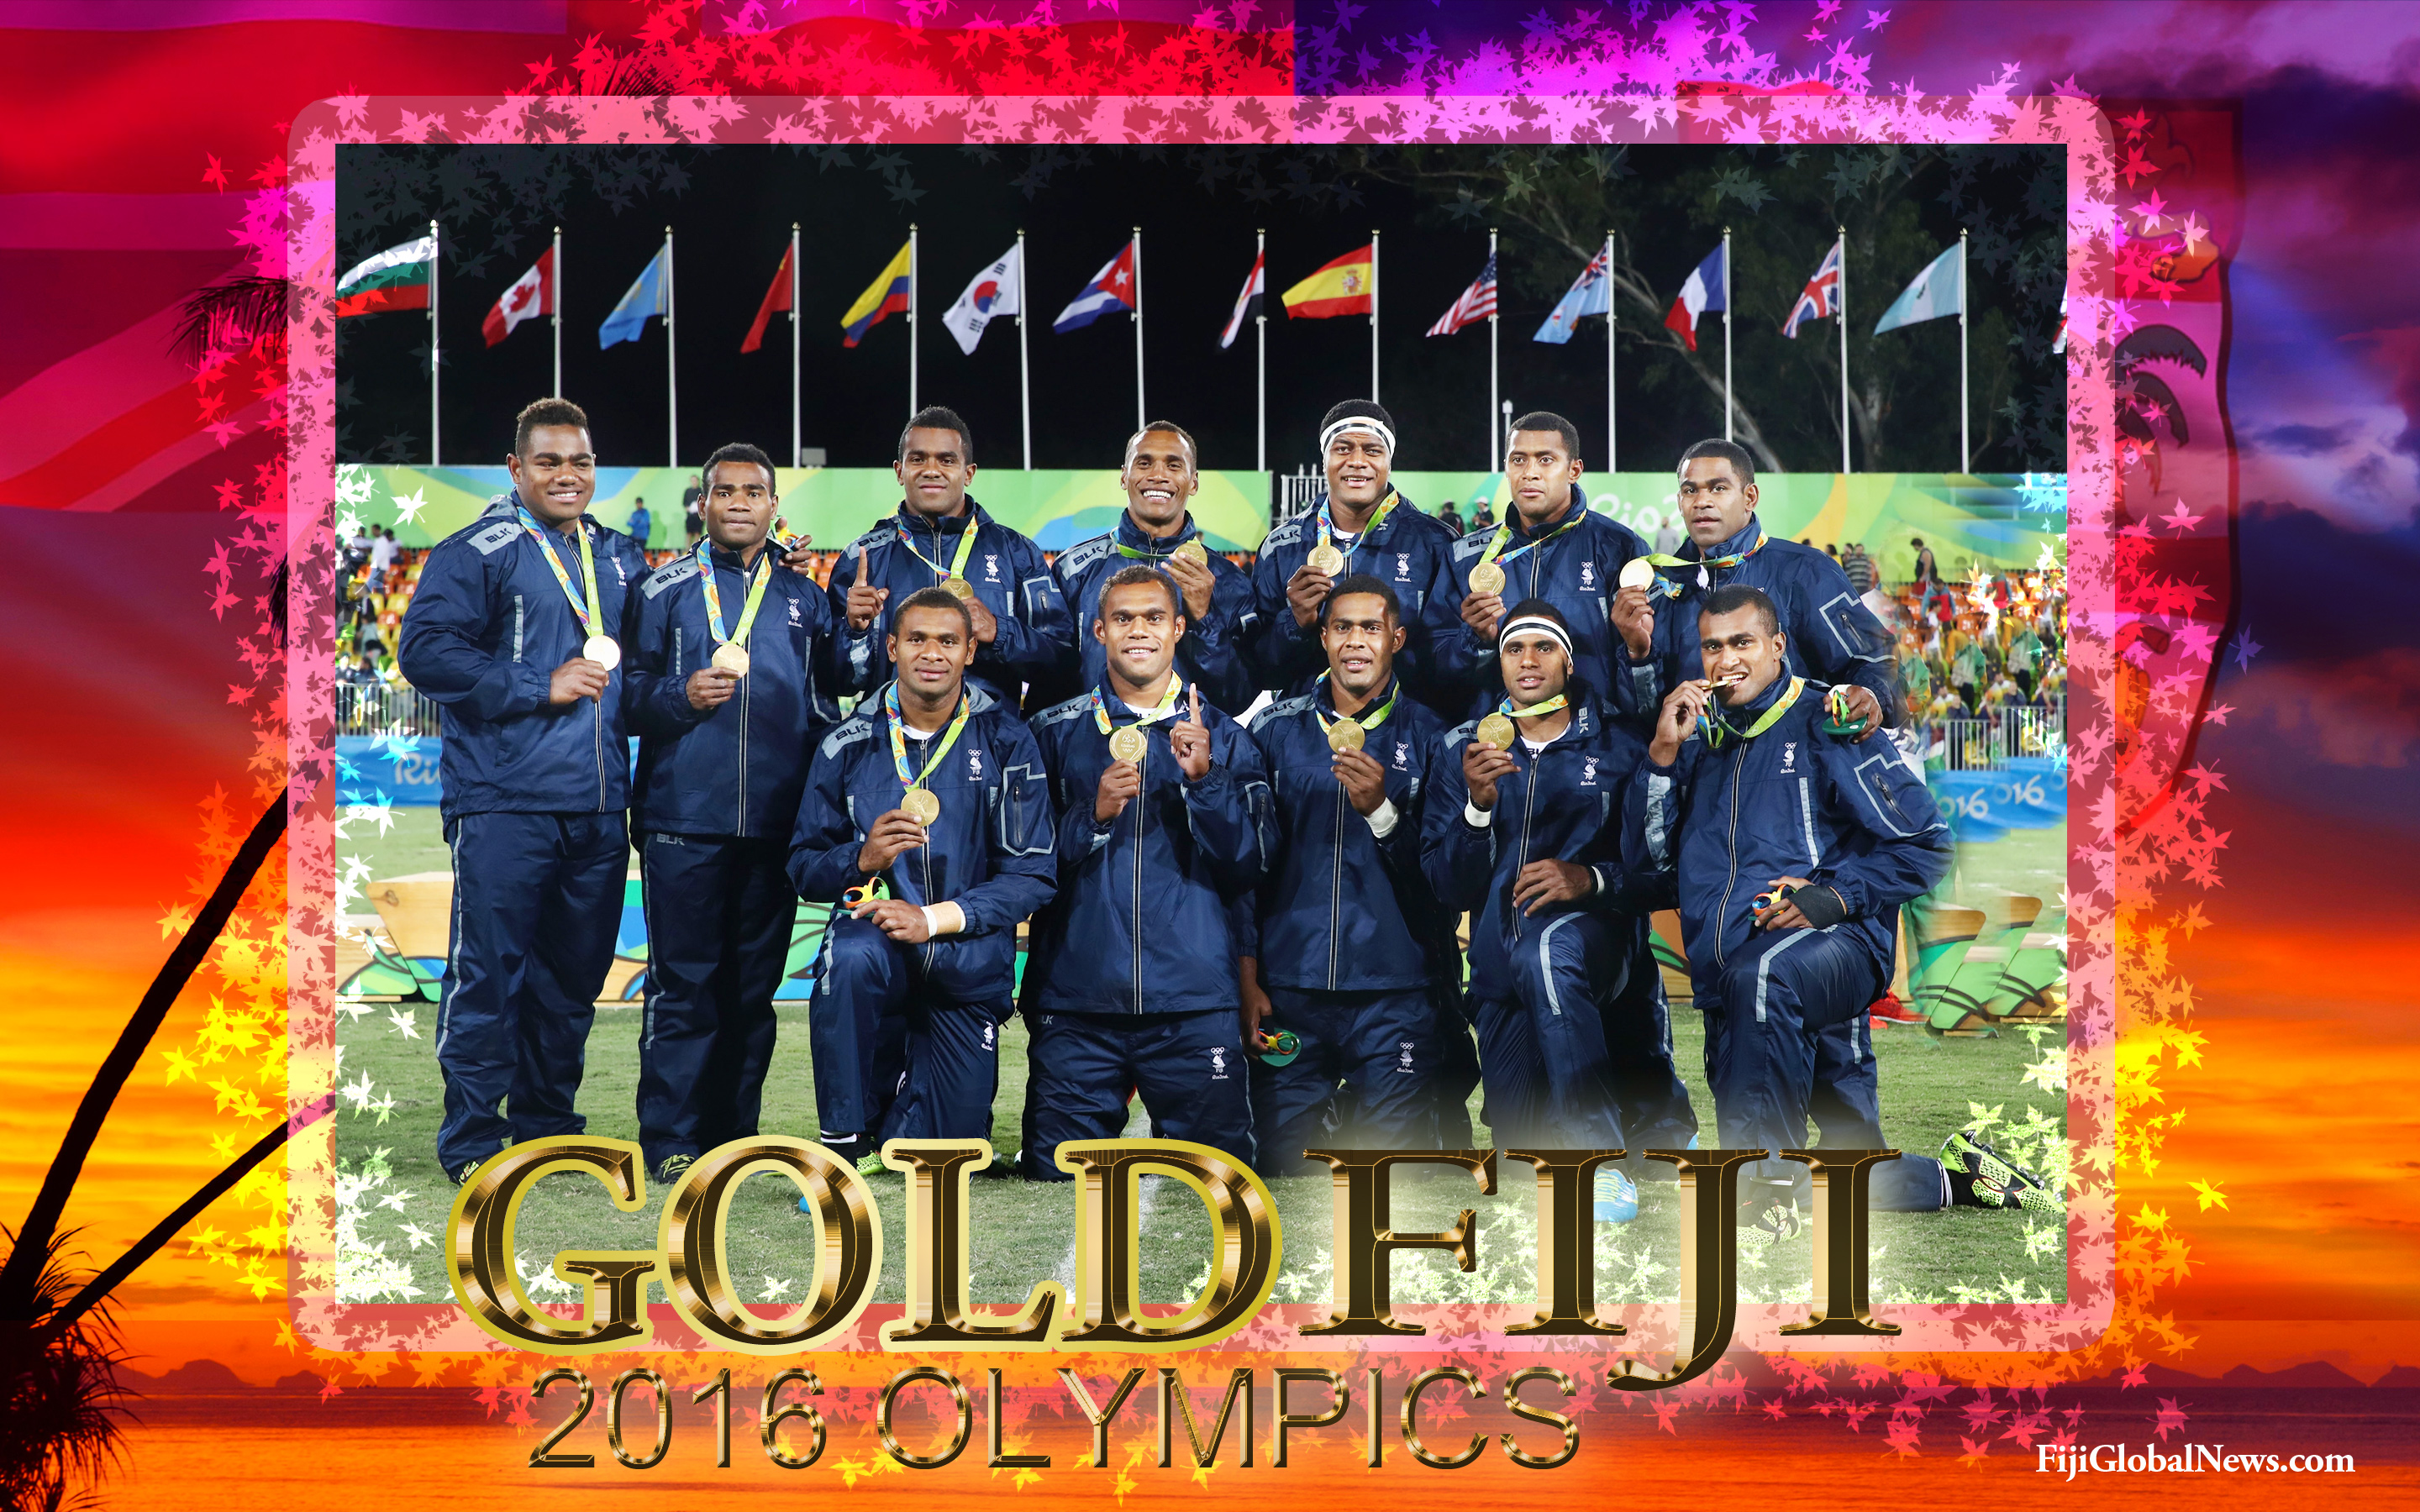 Fiji Gold Medalist Olympics 2016 Poster Wallpaper Free Download